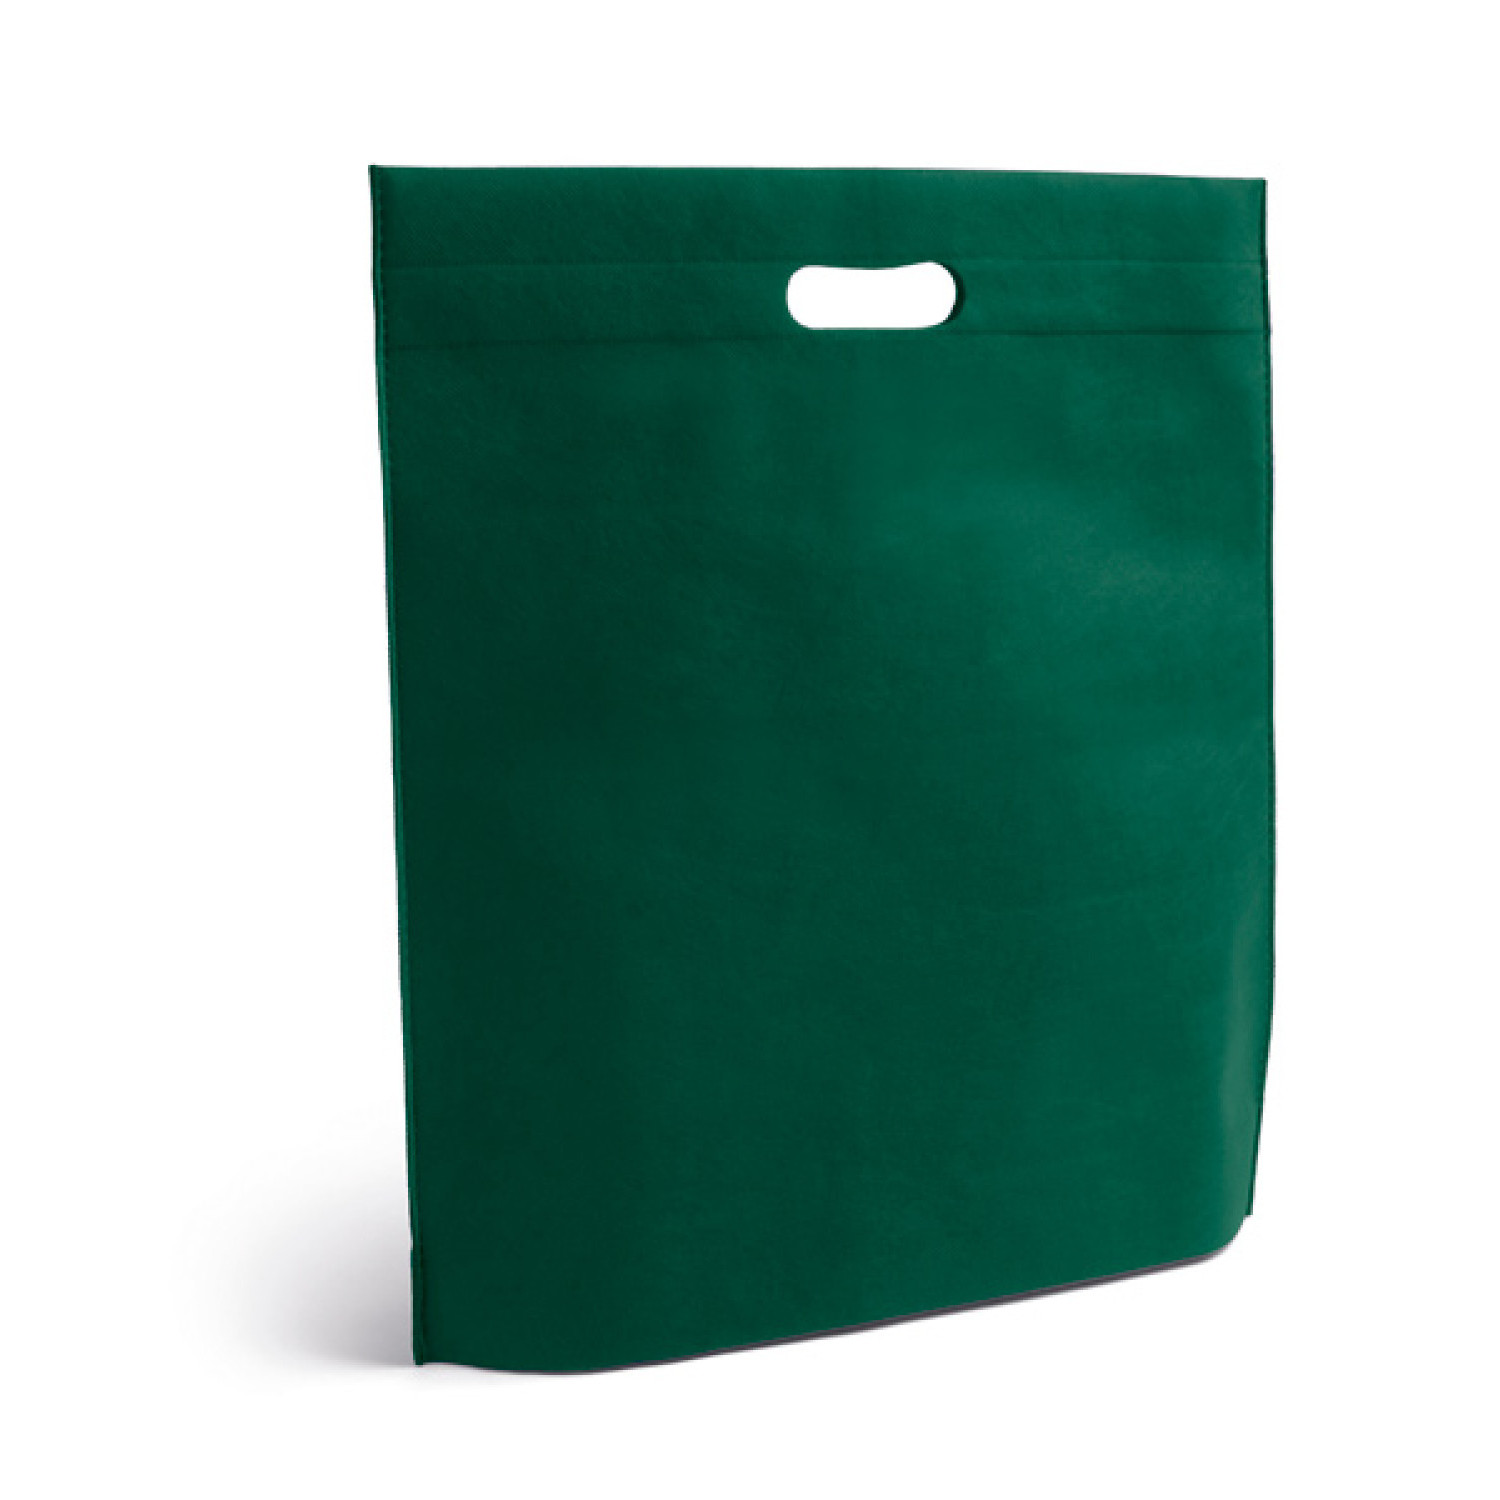 Рекламна торбичка TB-057, тъмно зелена